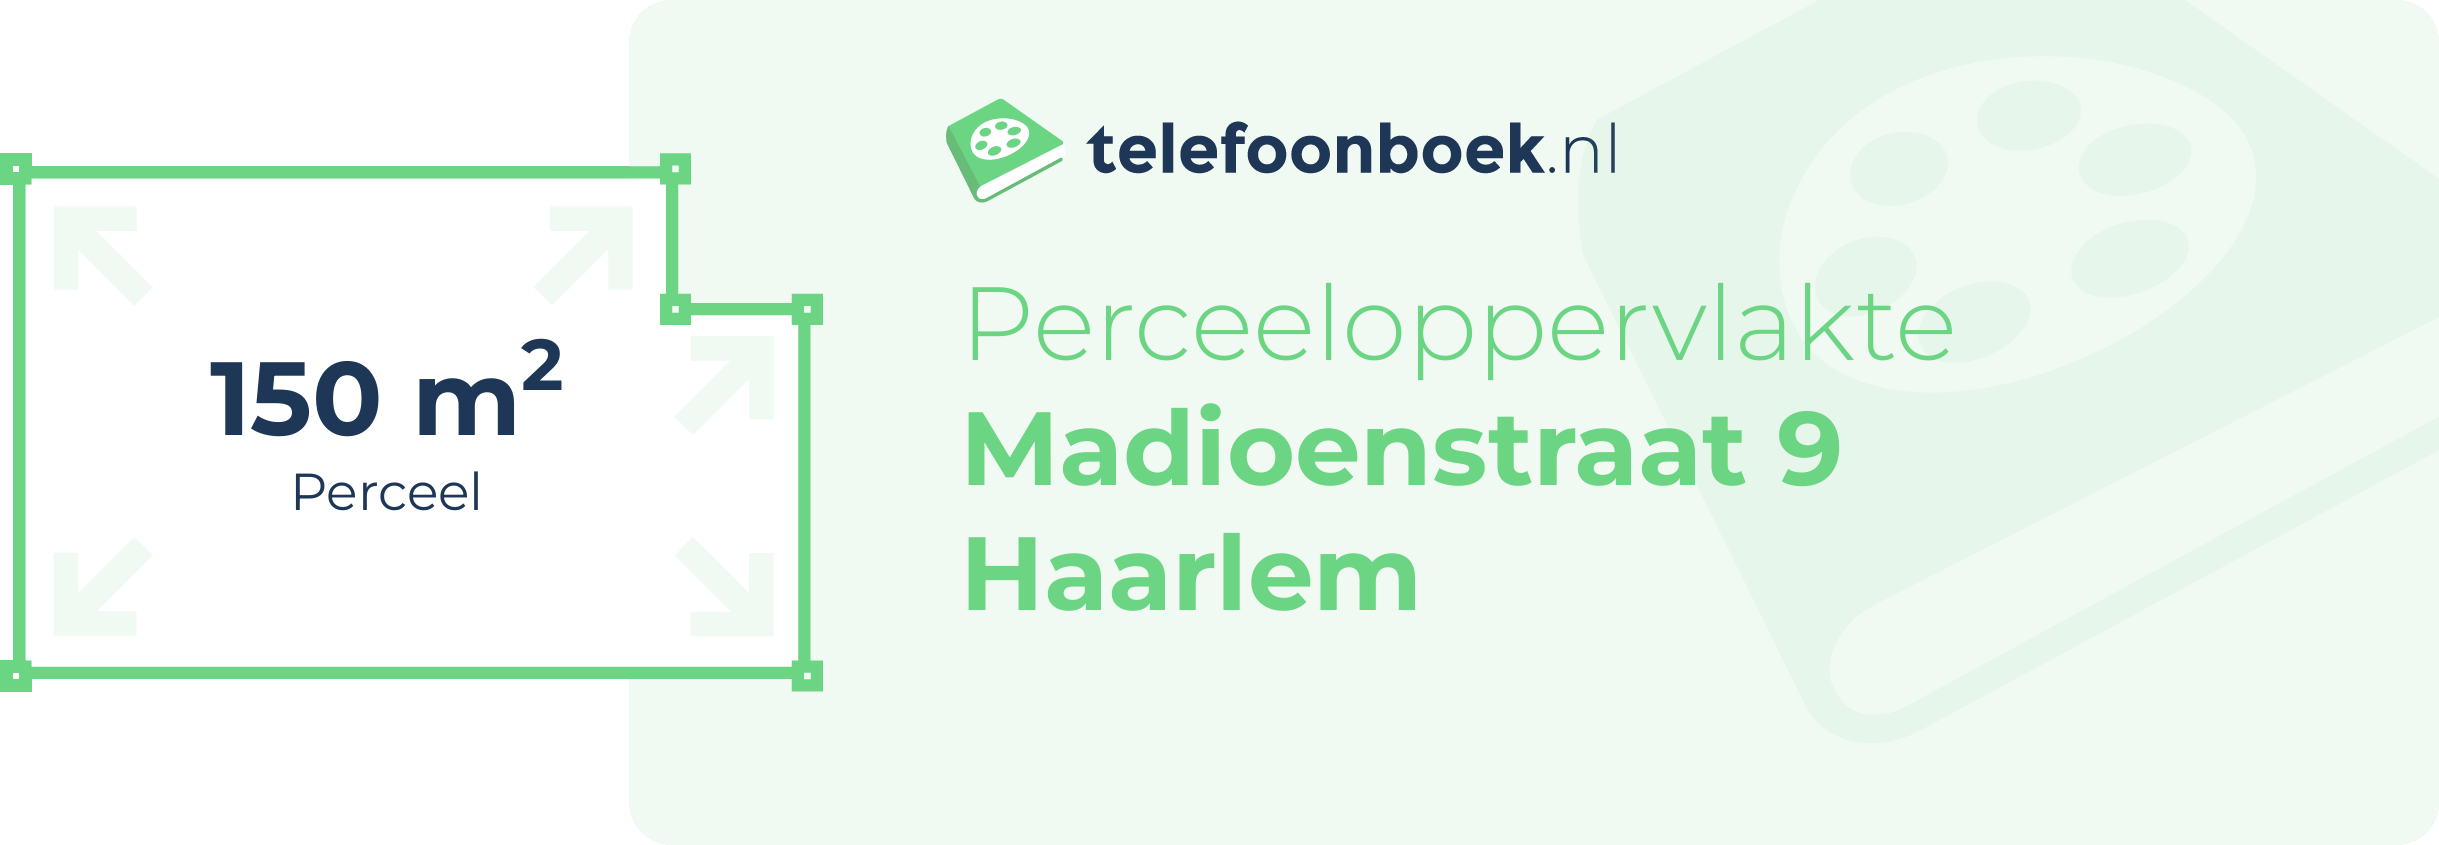 Perceeloppervlakte Madioenstraat 9 Haarlem